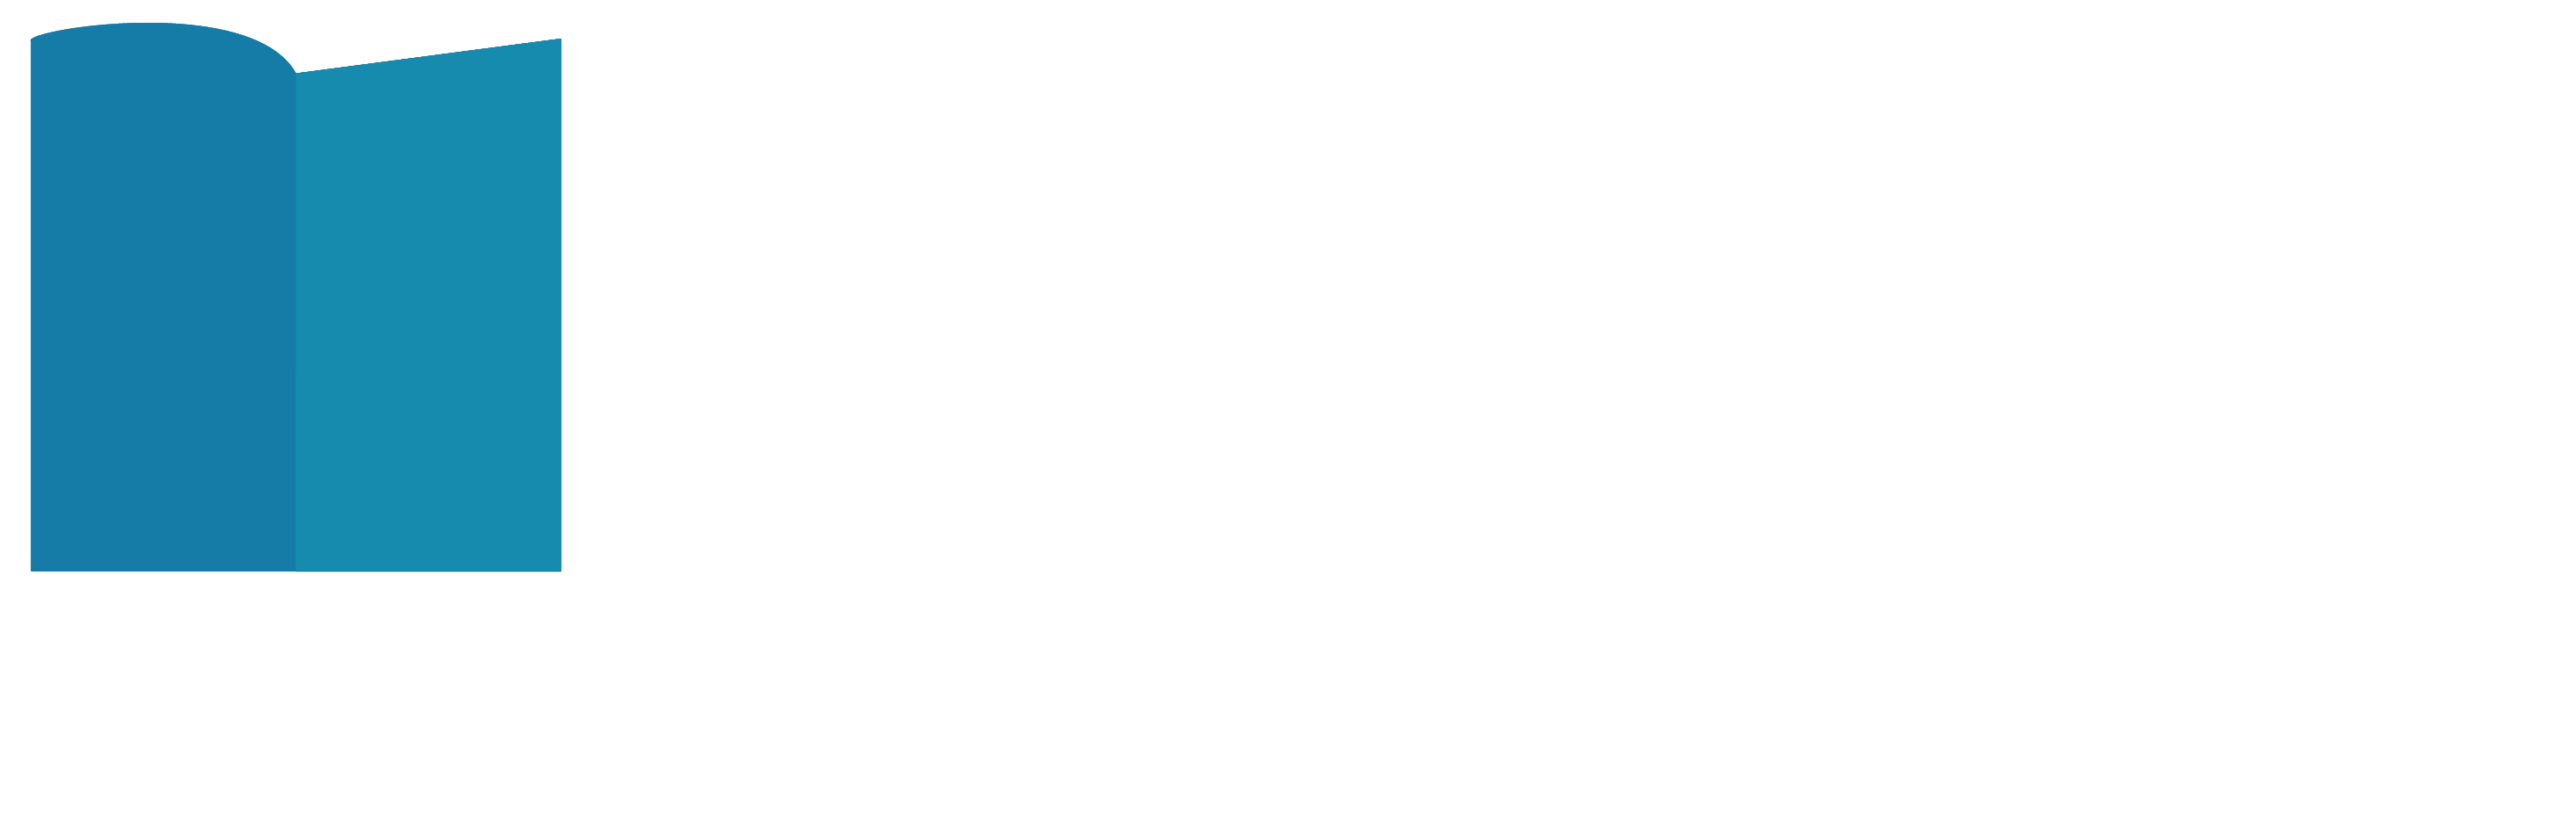 Genevieve Thompson RN, PhD – Associate Professor Logo